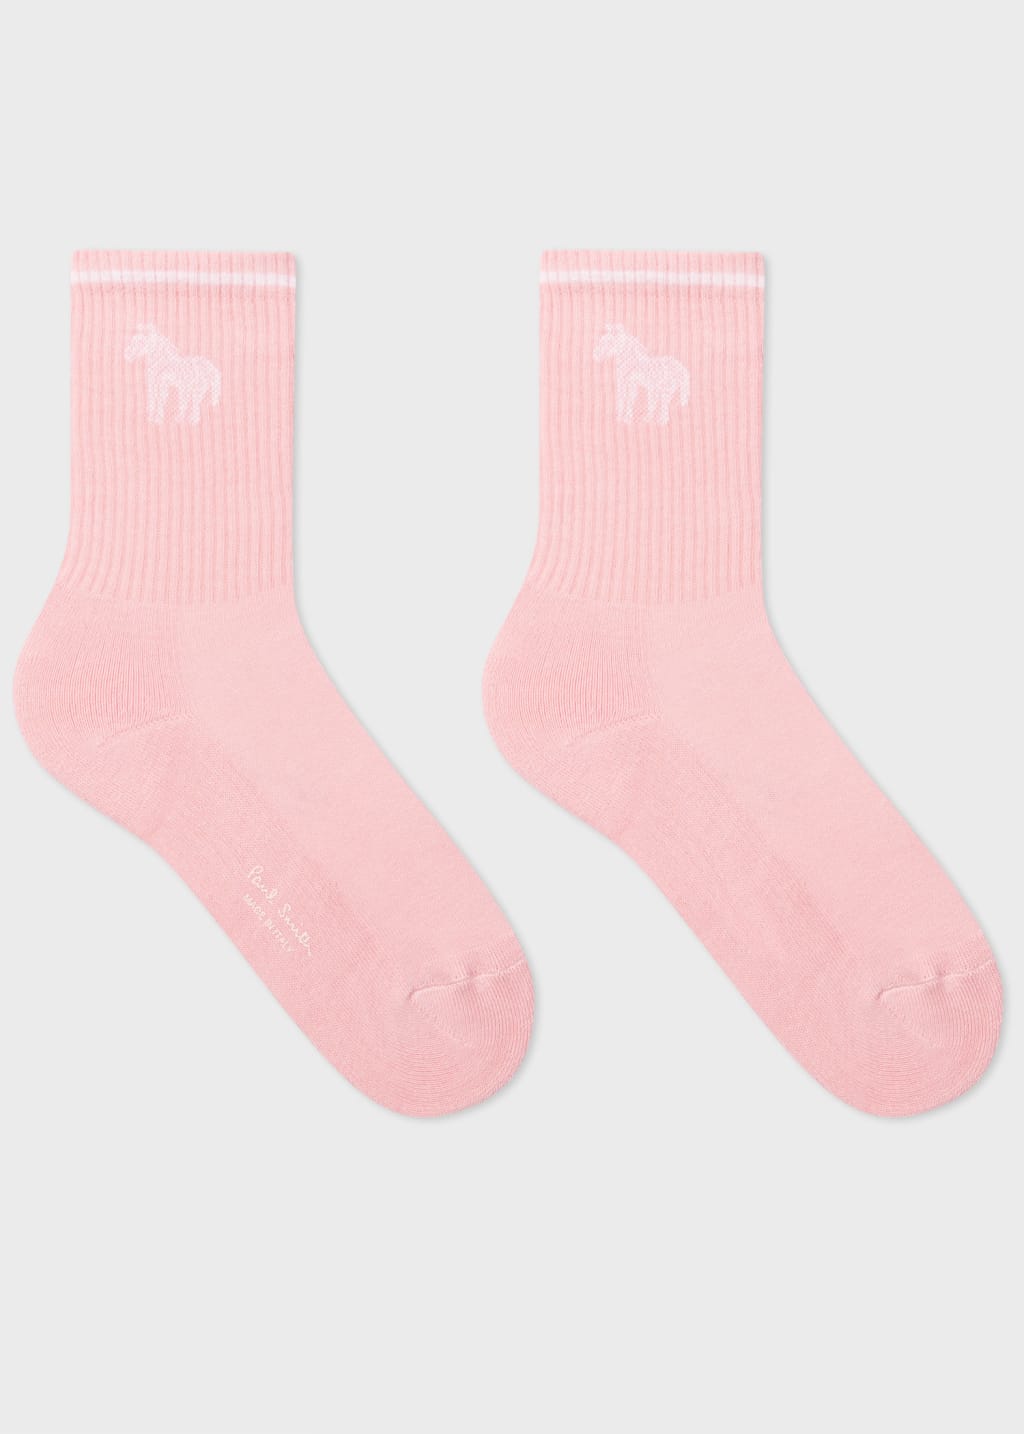 Women's Ribbed 'Zebra' Socks Three Pack